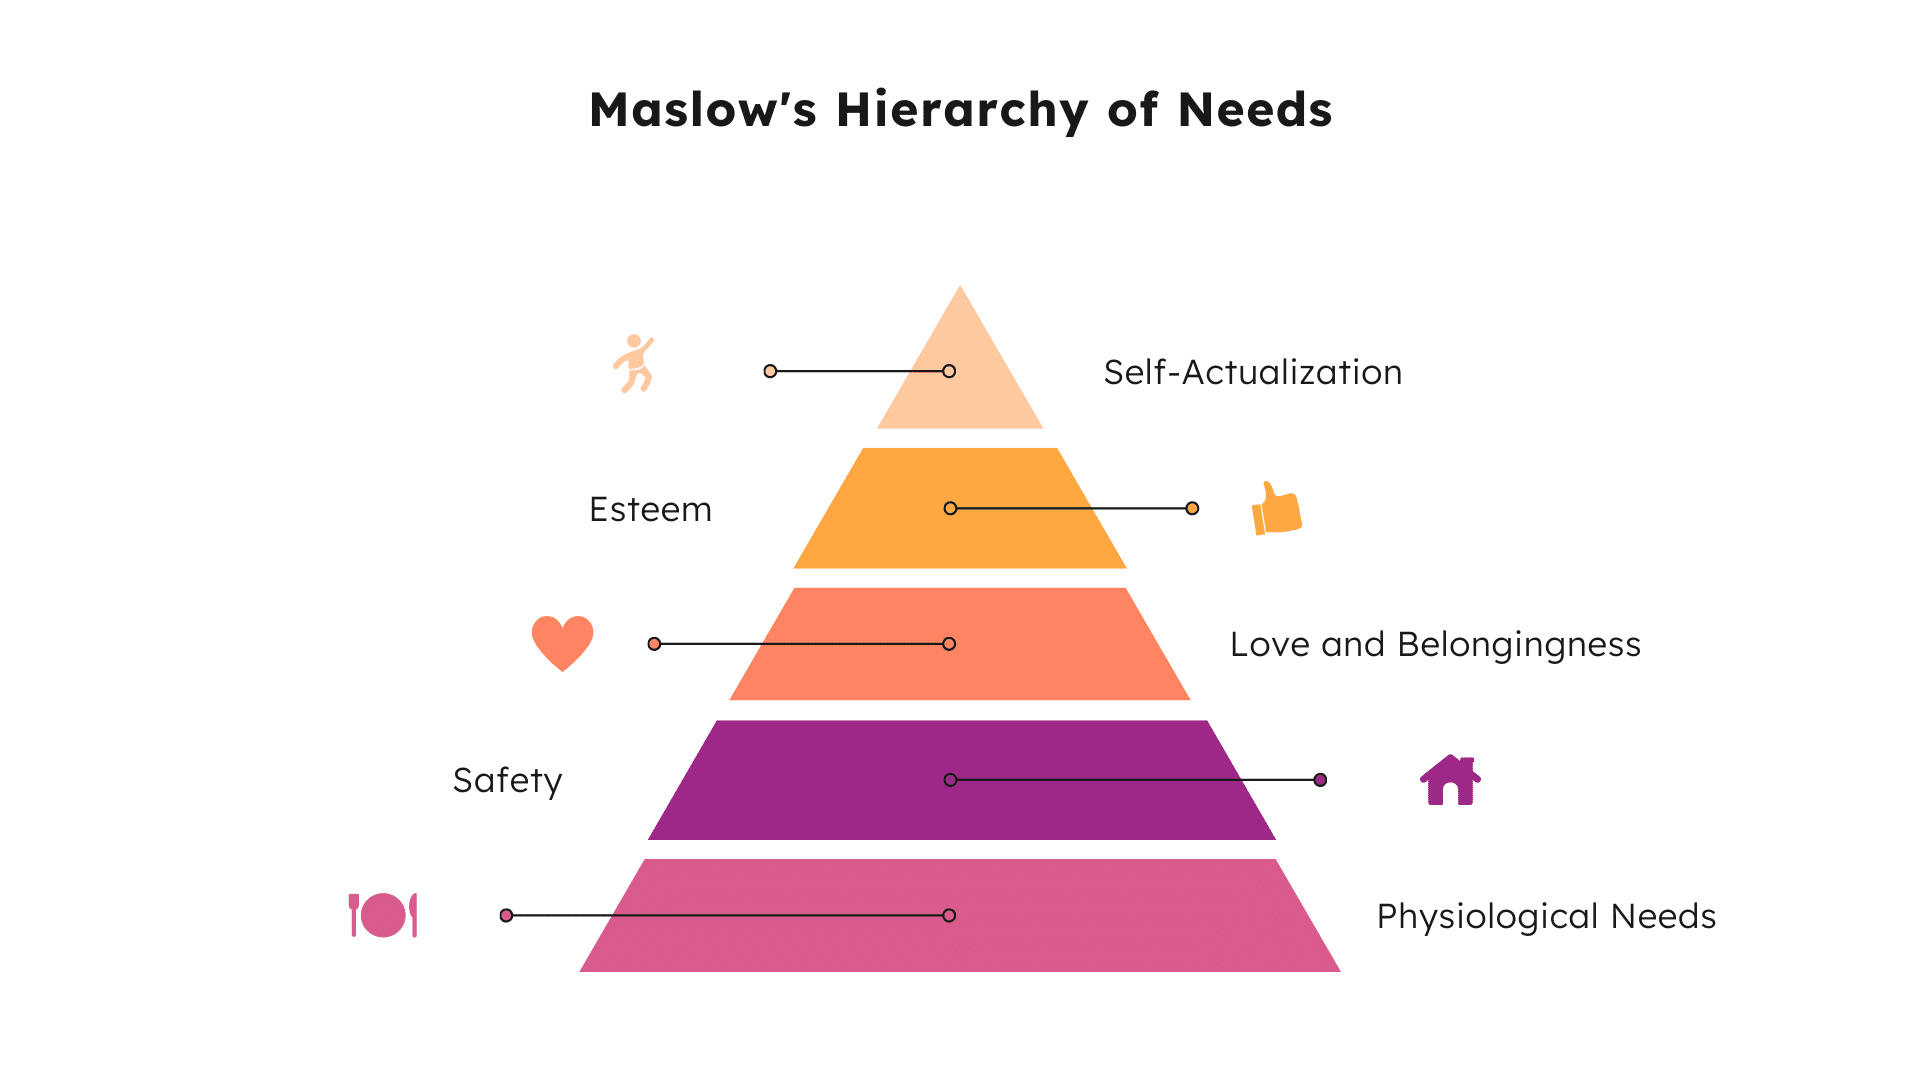 Maslows Hierarchy of Needs pyramid